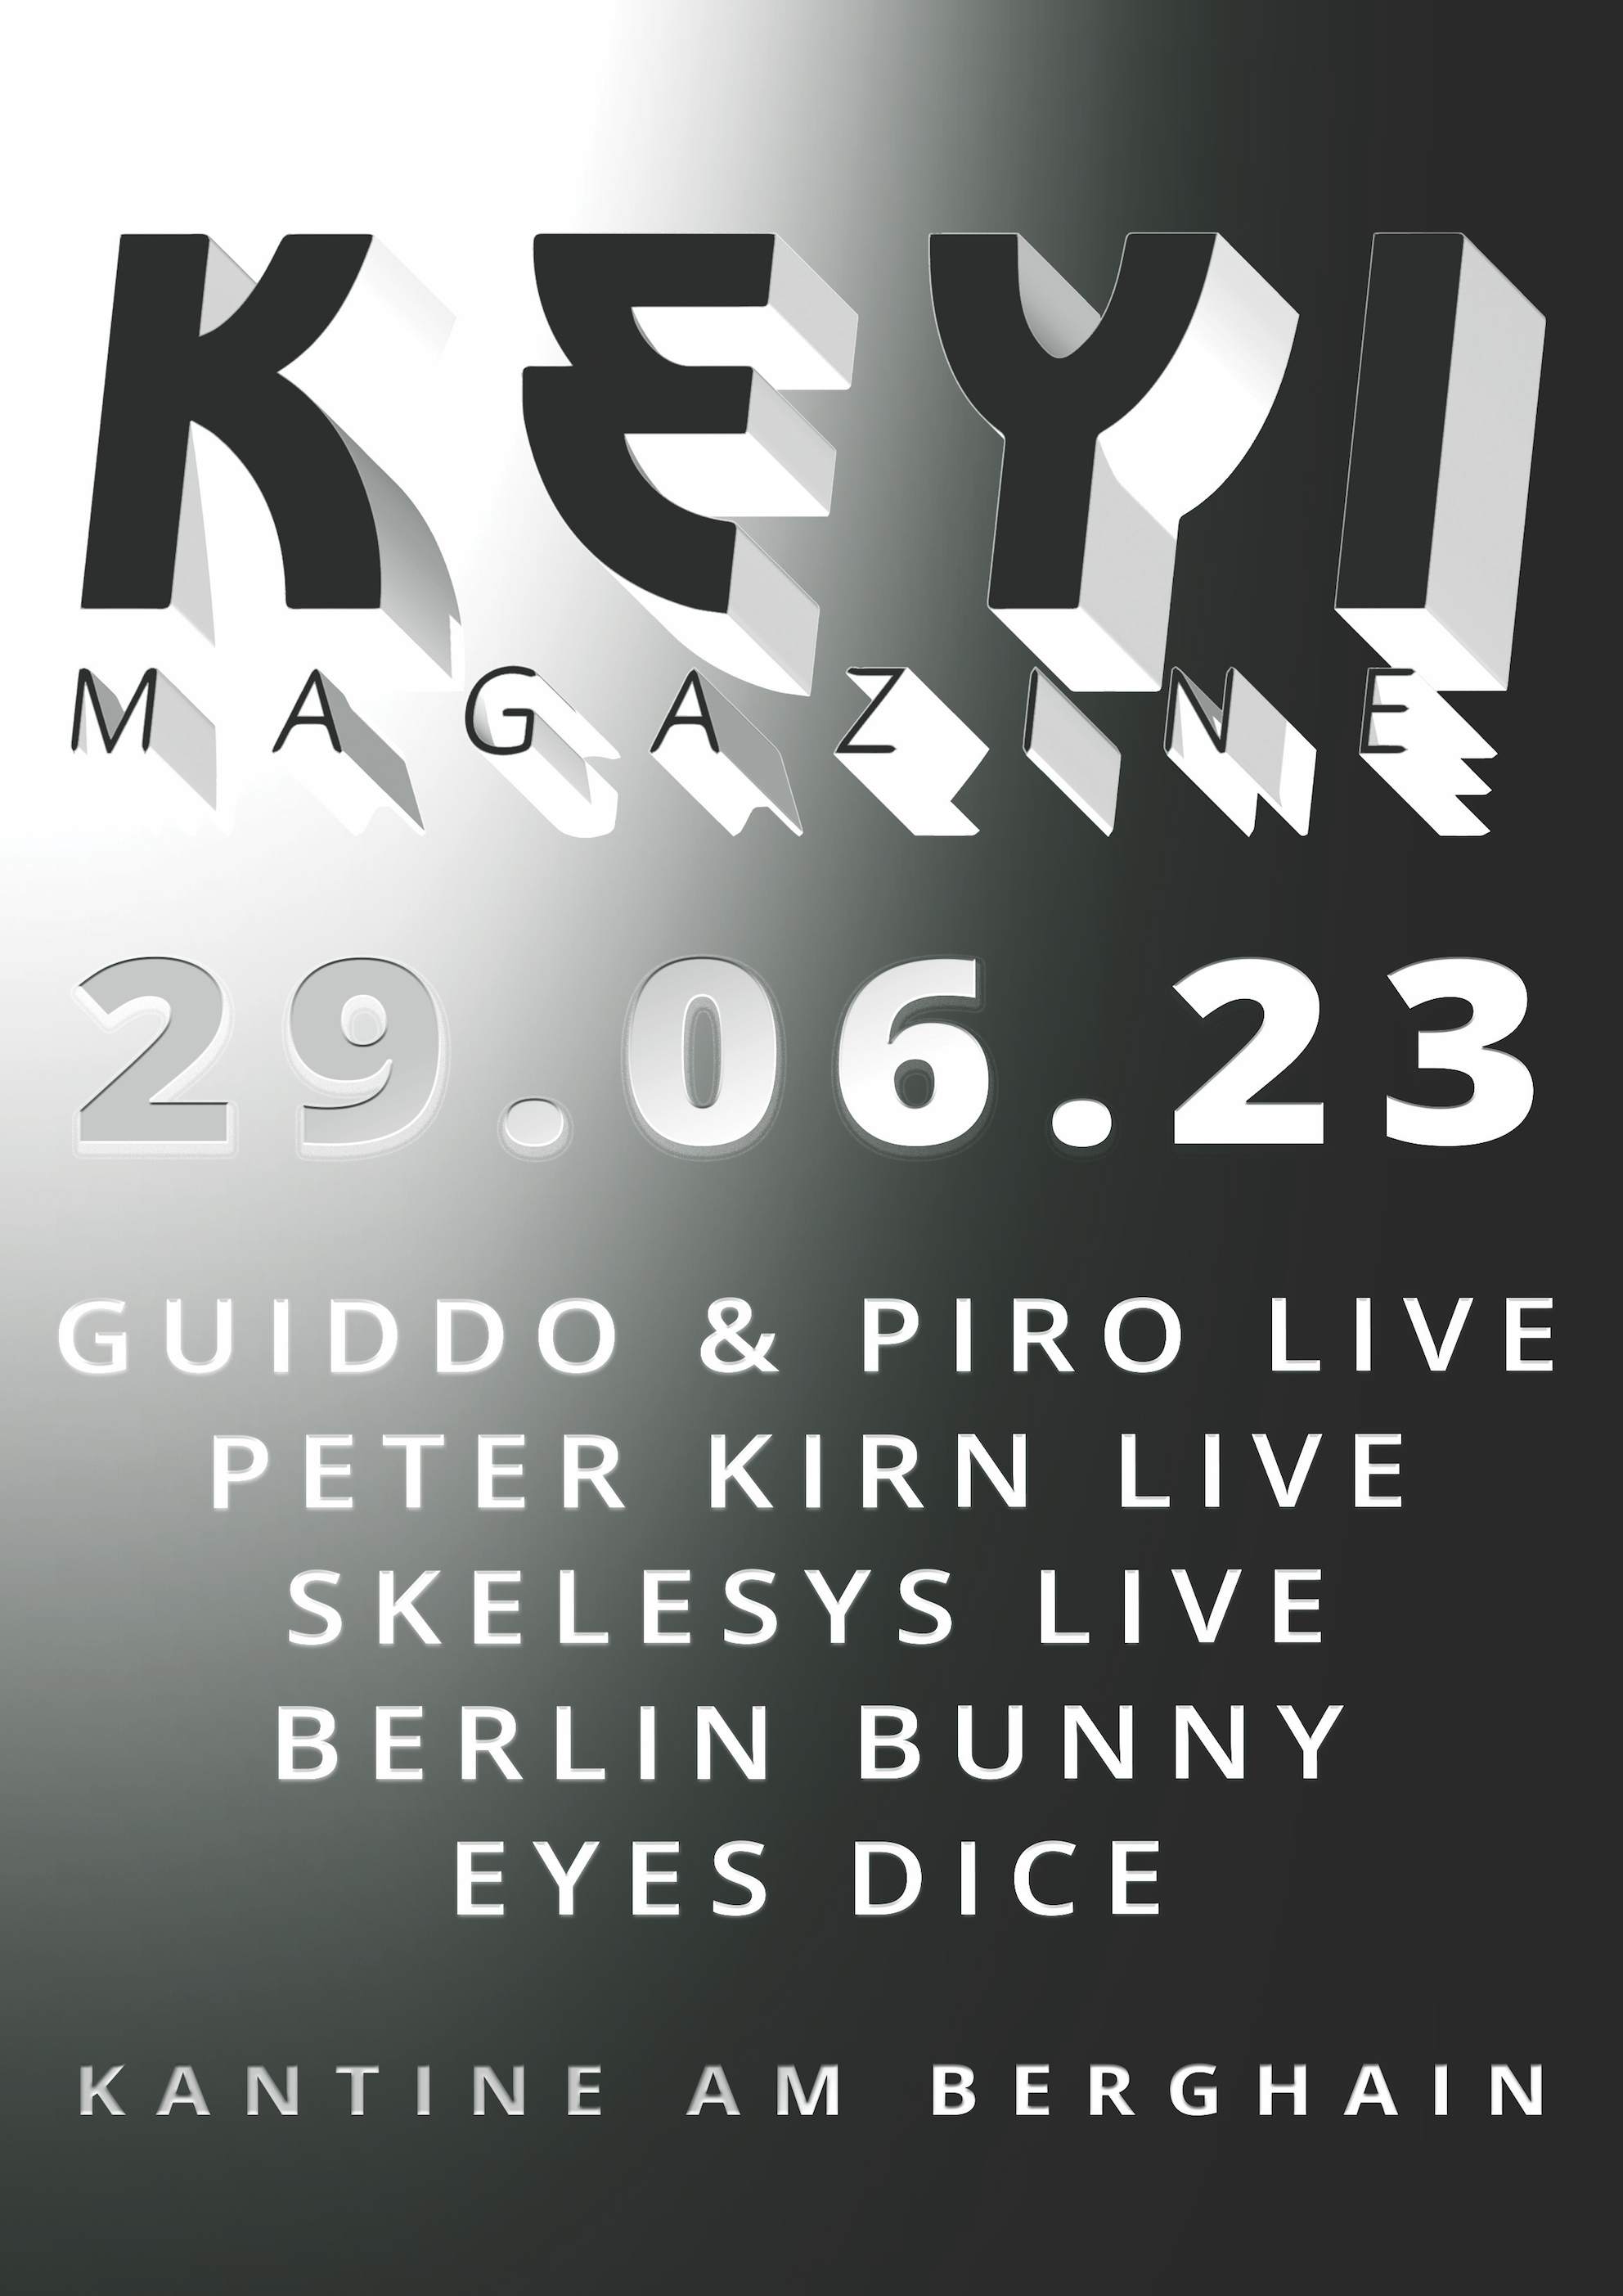 Keyi Magazine charity event - フライヤー表